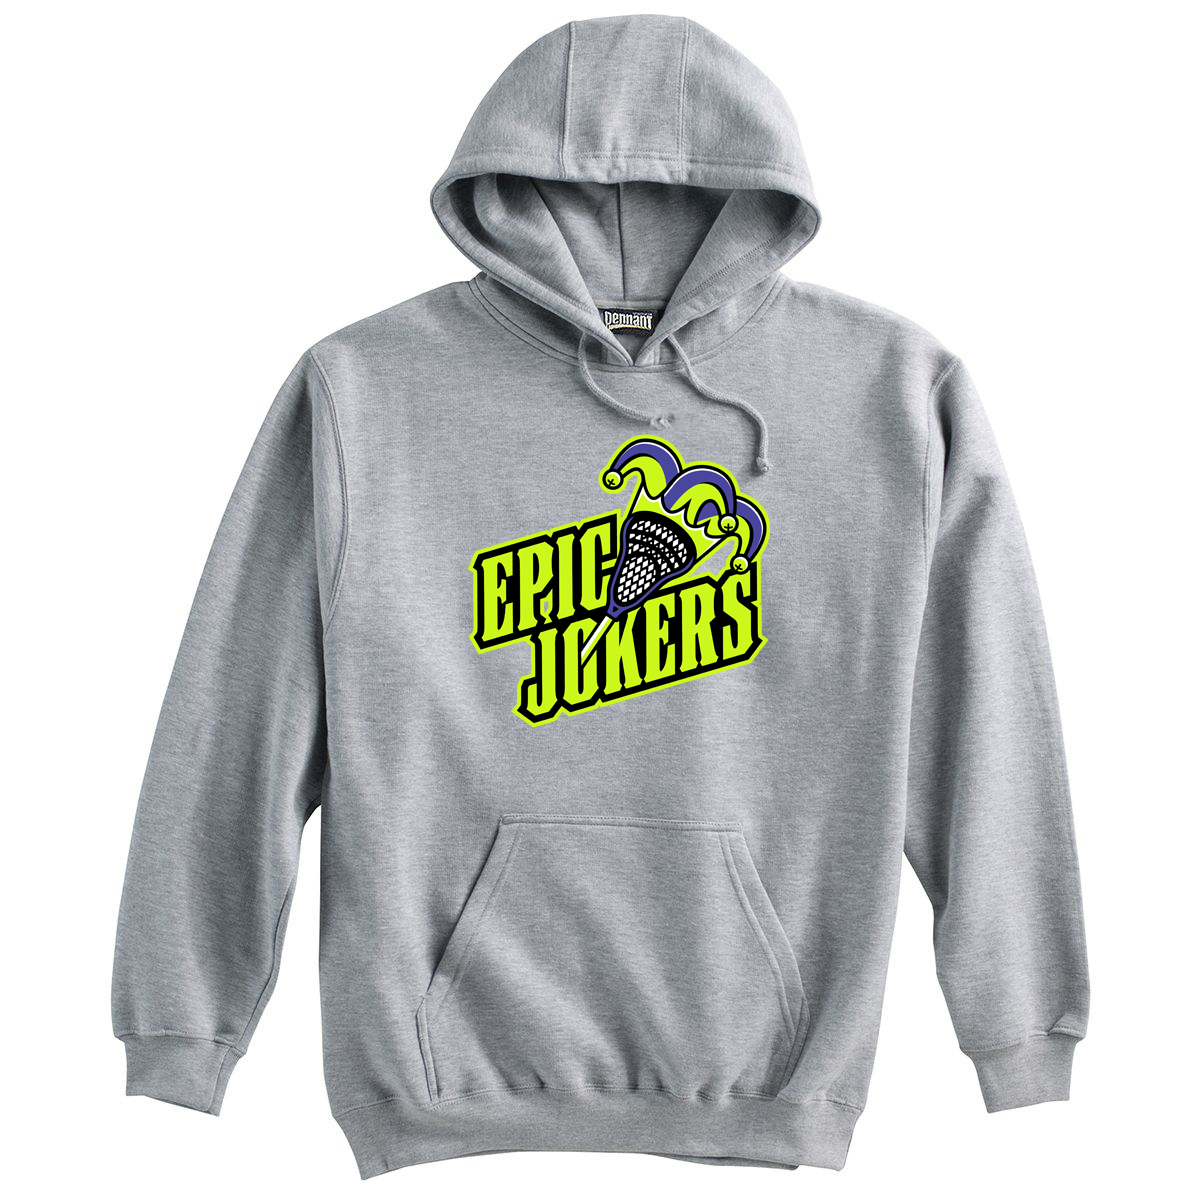 Epic Lacrosse Jokers Grey Sweatshirt